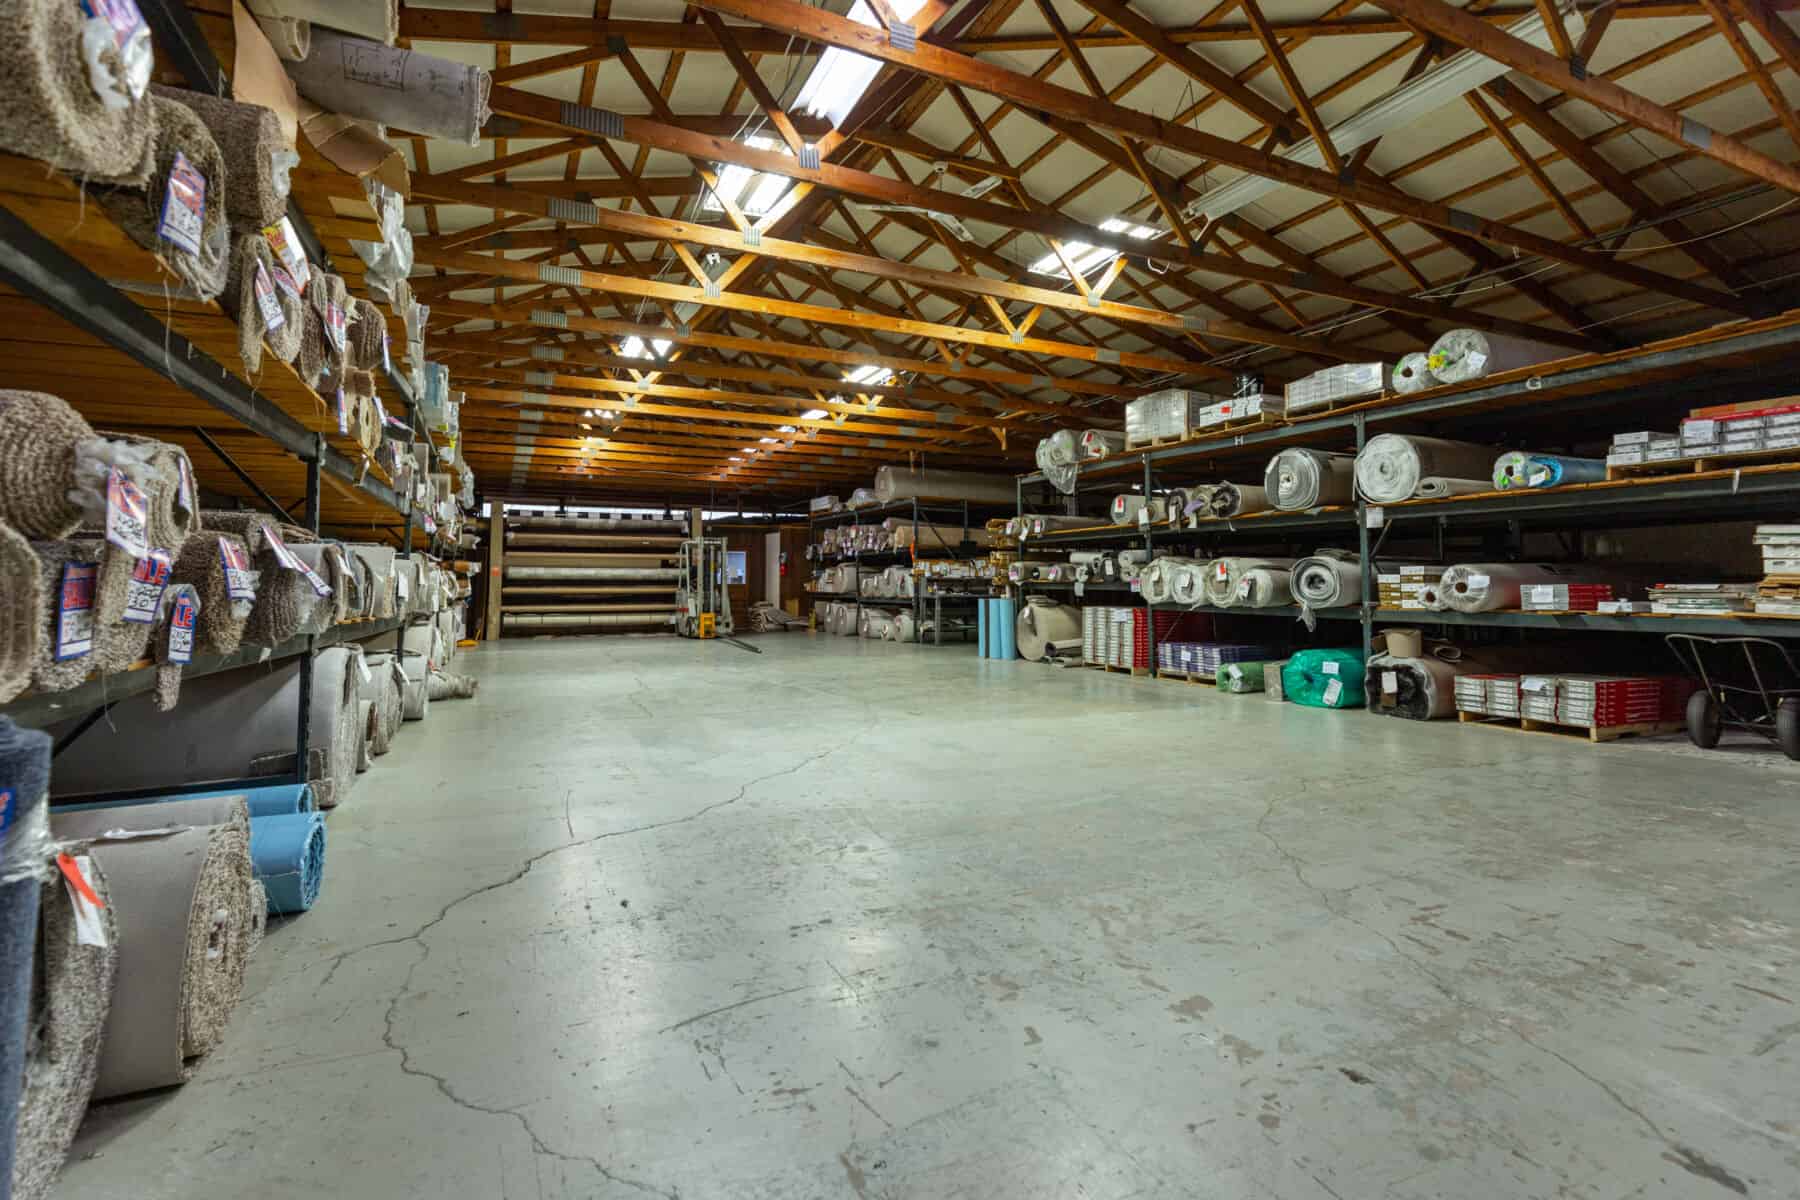 Warehouse of carpet rolls